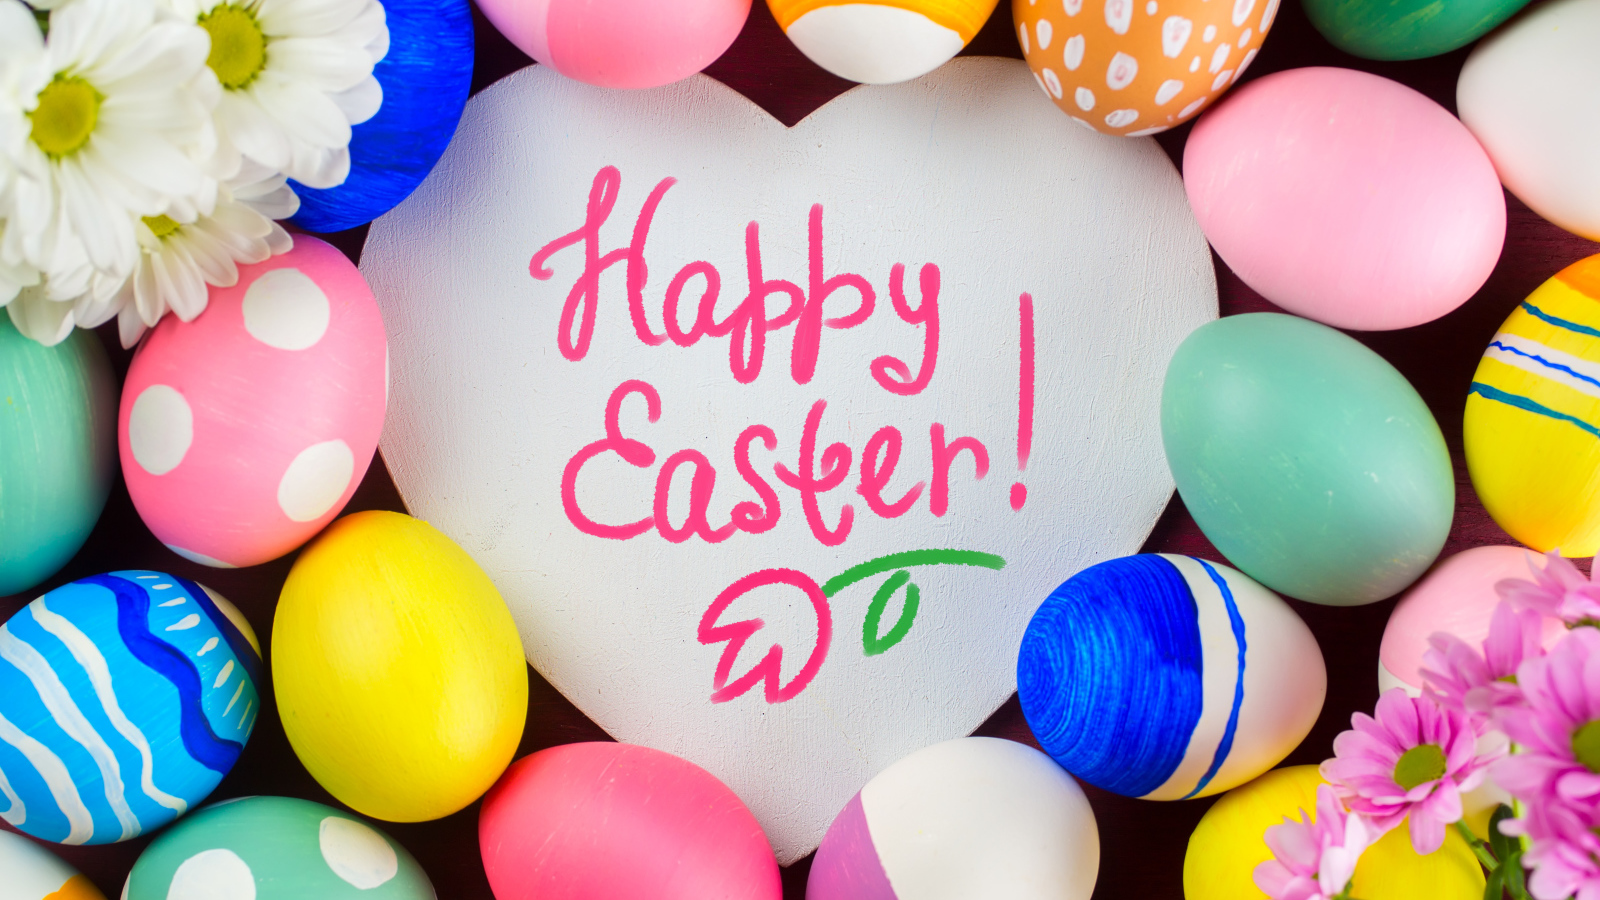 Разноцветные крашеные яйца с надписью Happy Easter